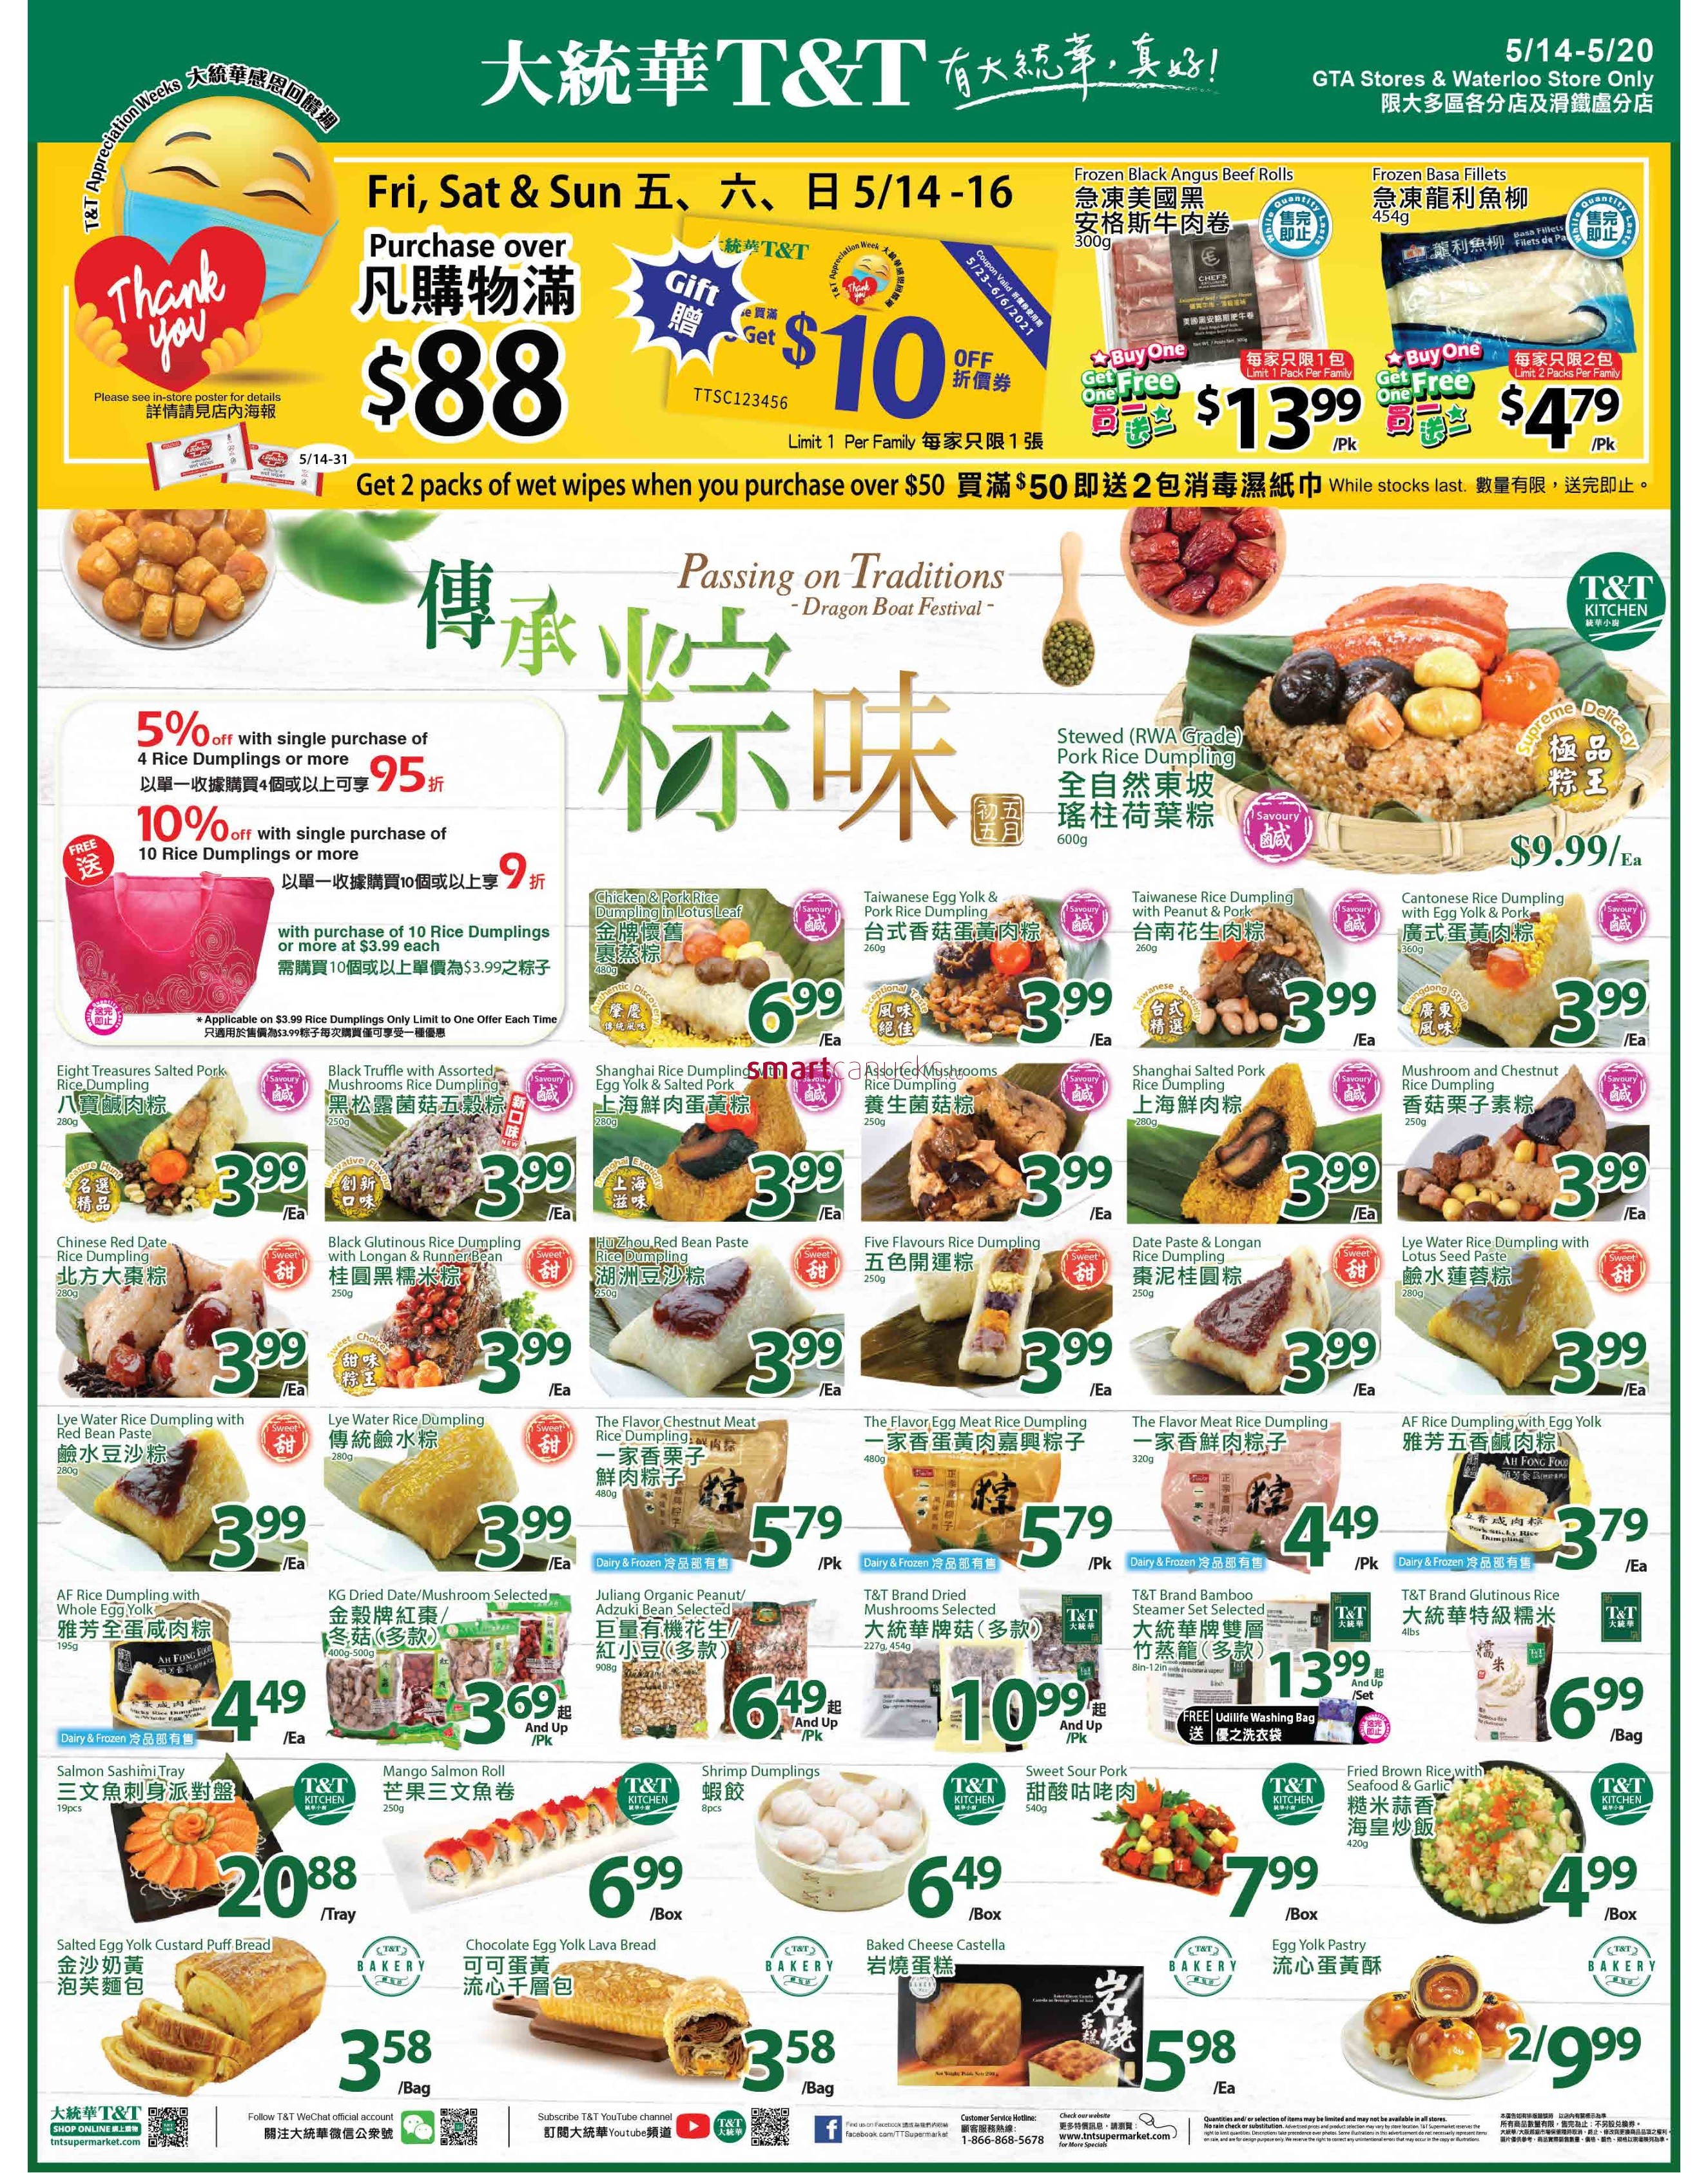 tt-supermarket-gta-waterloo-flyer-may-14-to-20-1.jpg